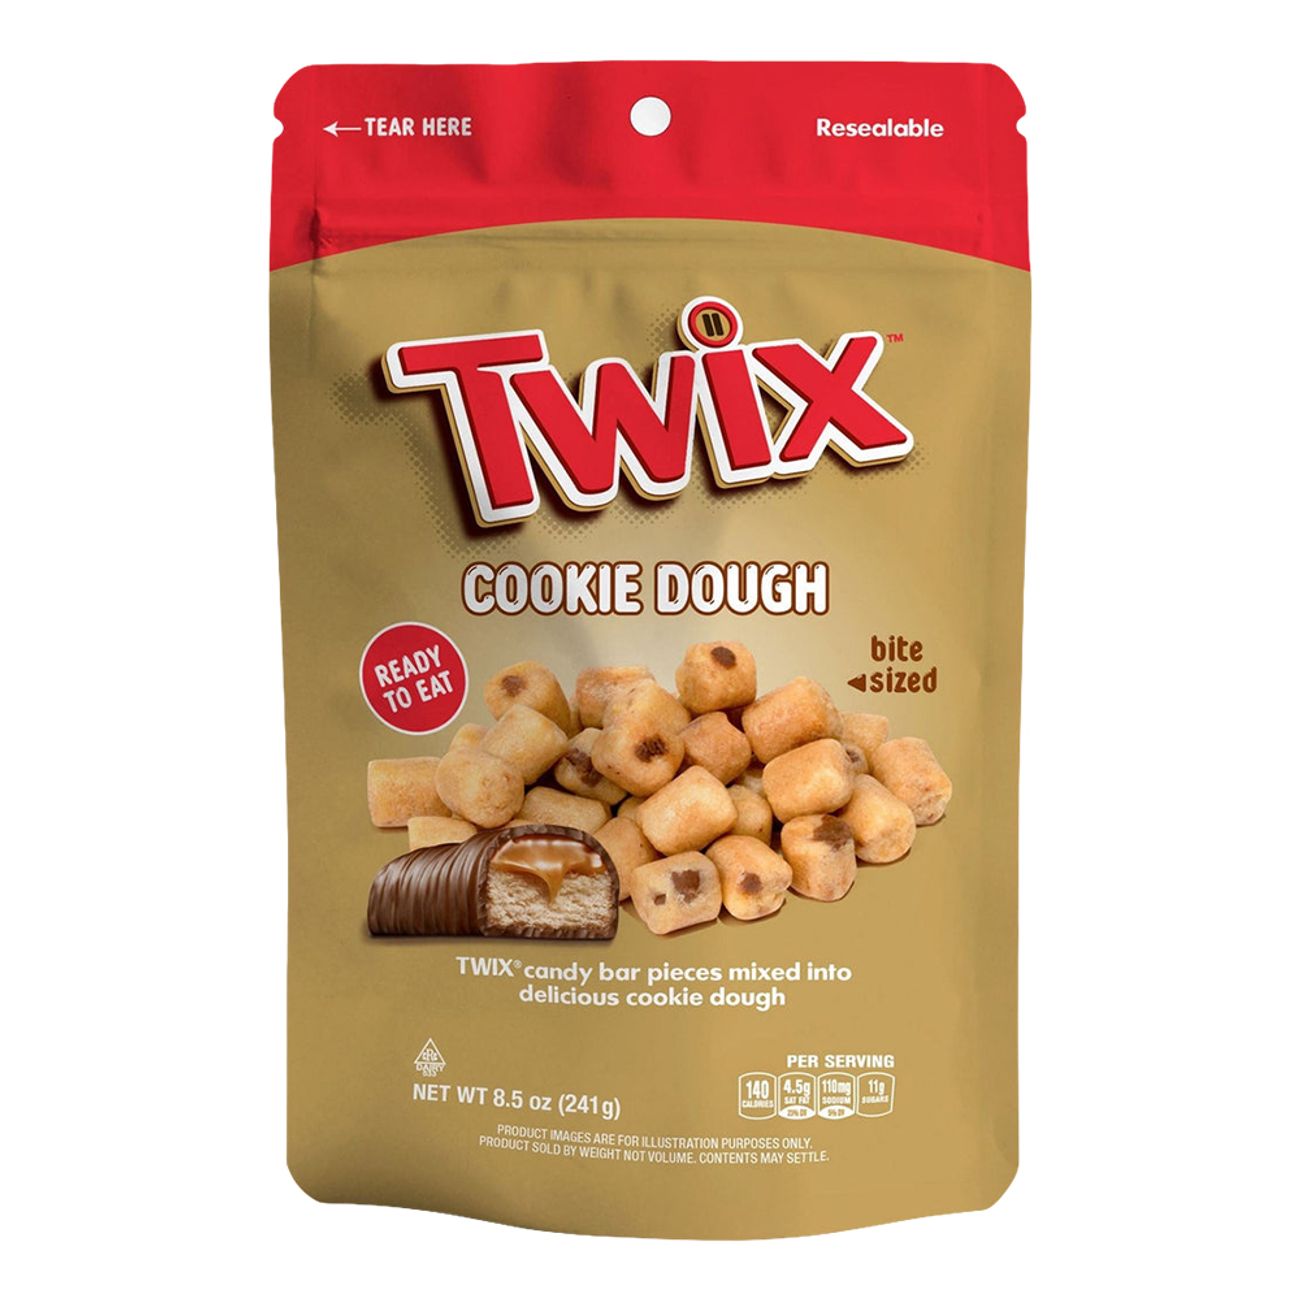 taste-of-nature-twix-cookie-dough-97428-1